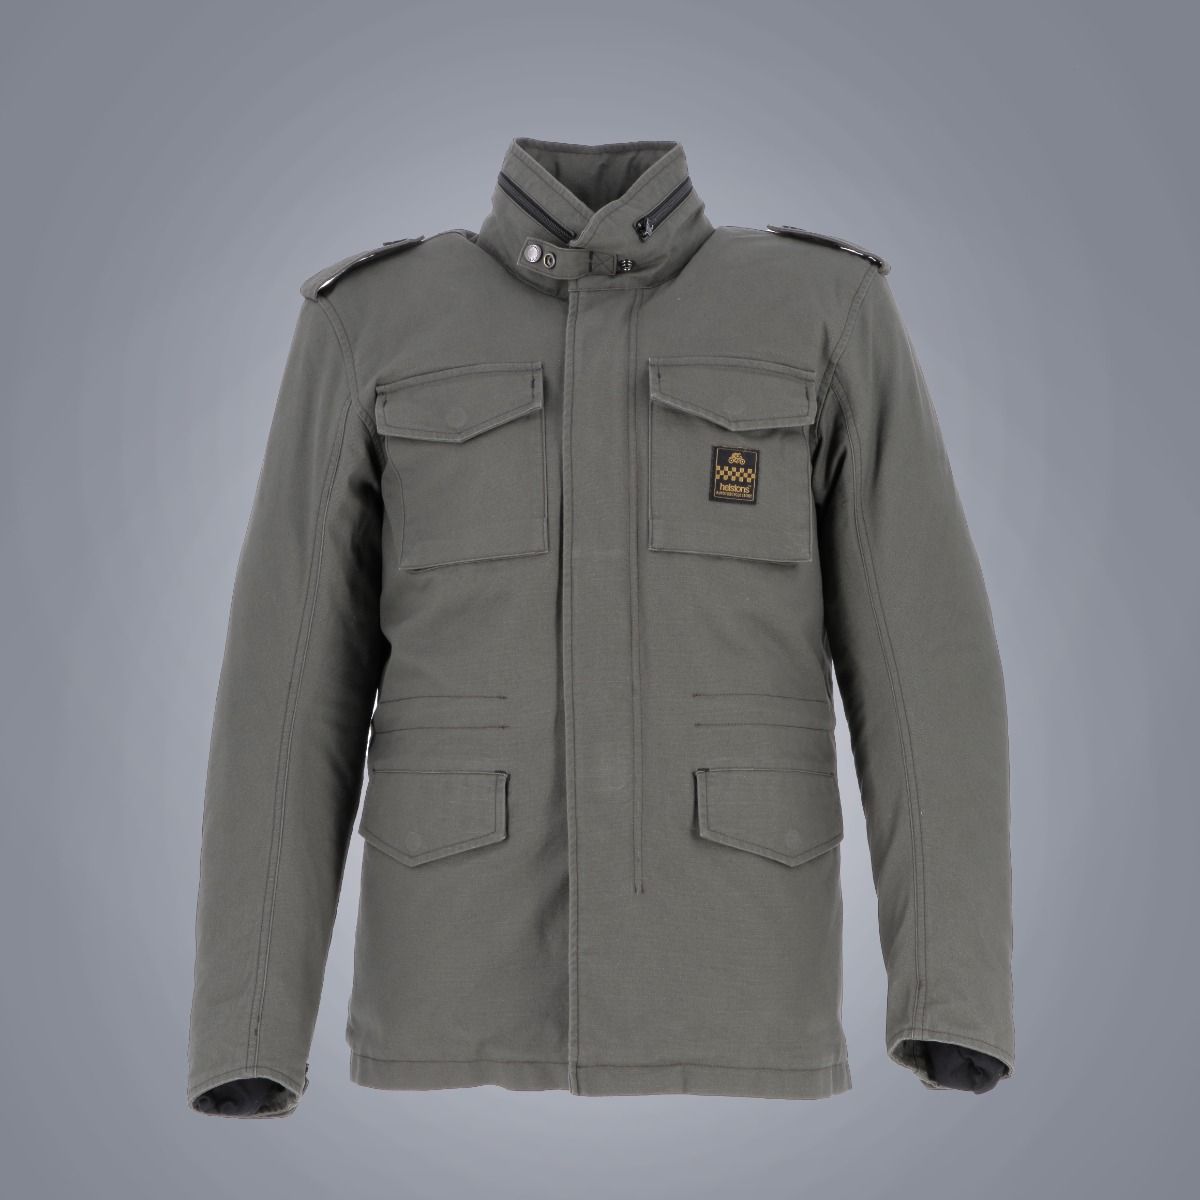 Image of Helstons Division Jacket Khaki Size 2XL ID 3662136100794